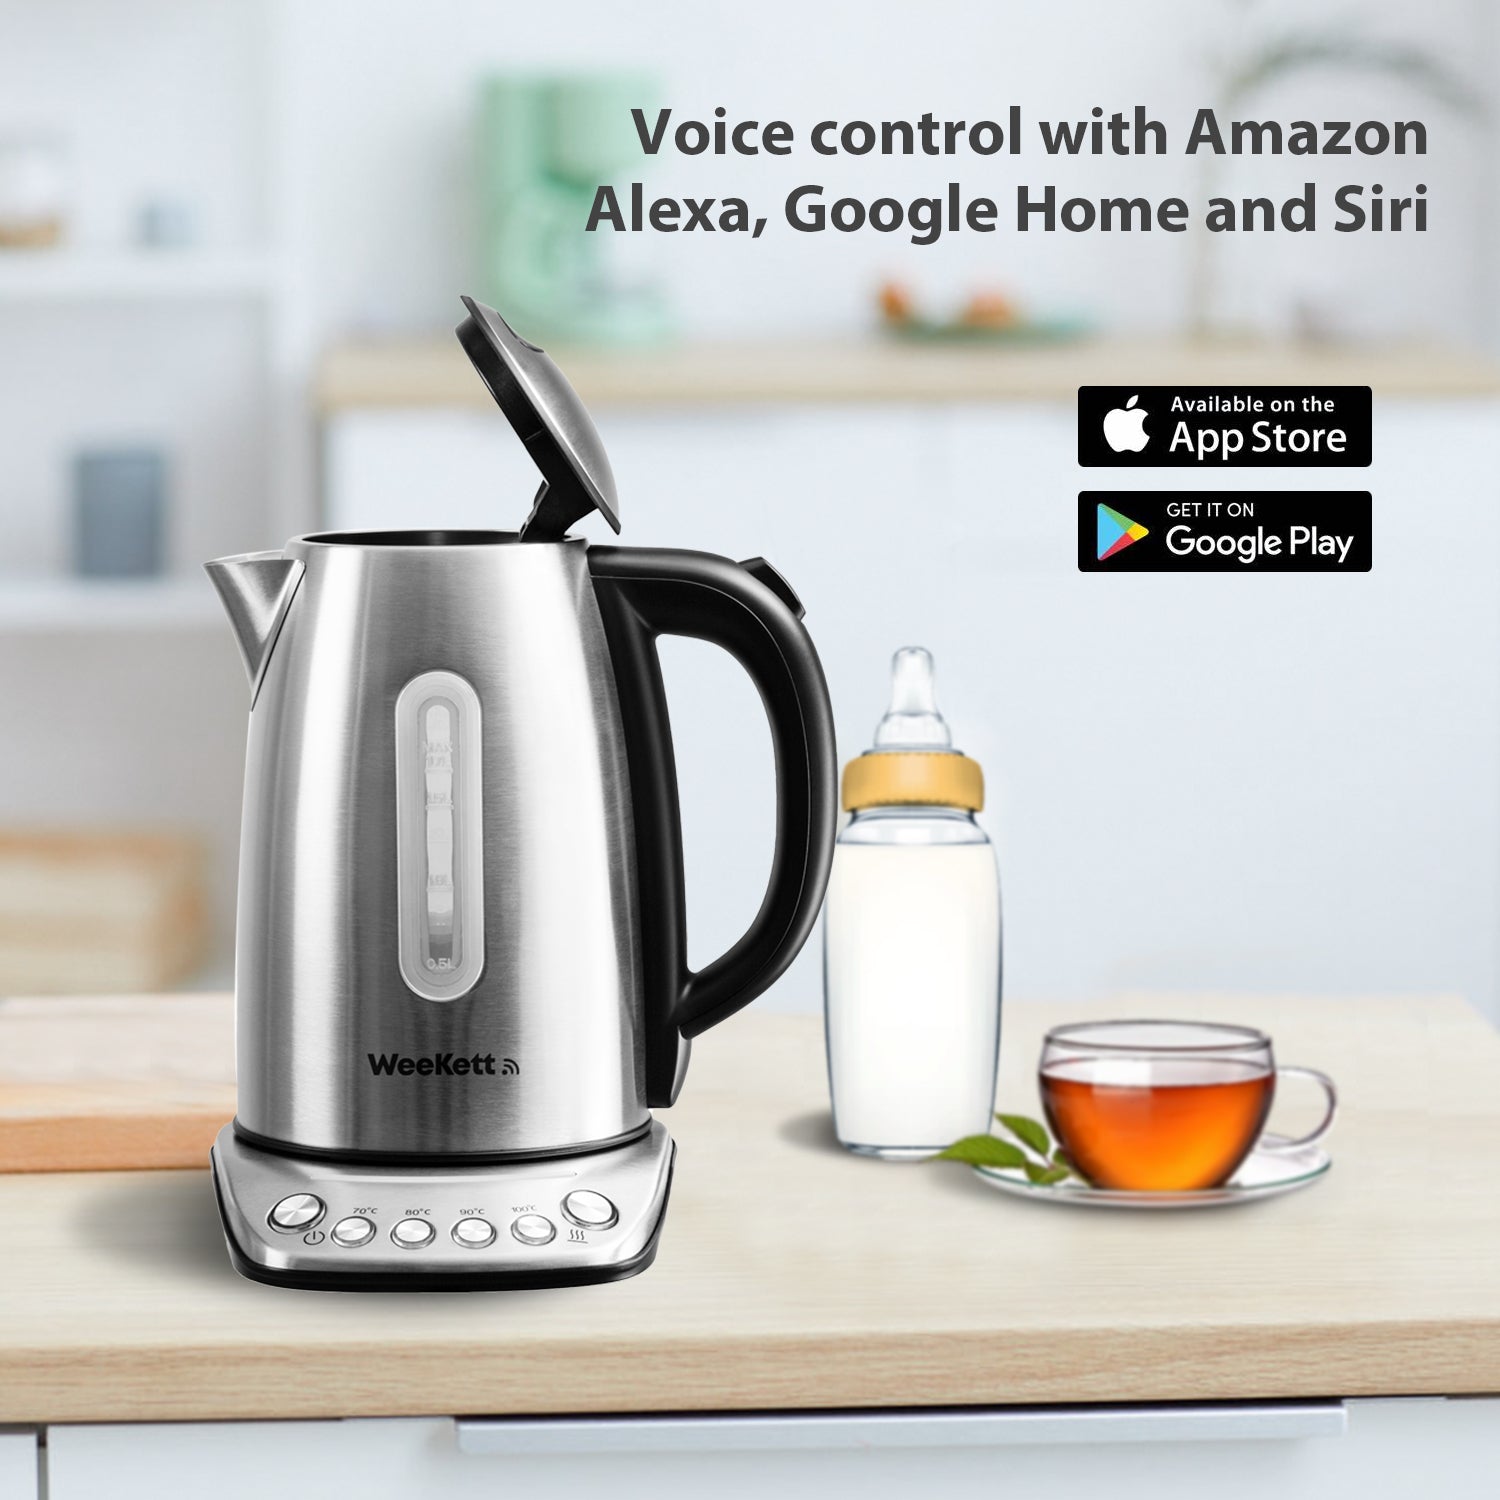 Smart Kettle by WeeKett - Works with Alexa, Google & Siri